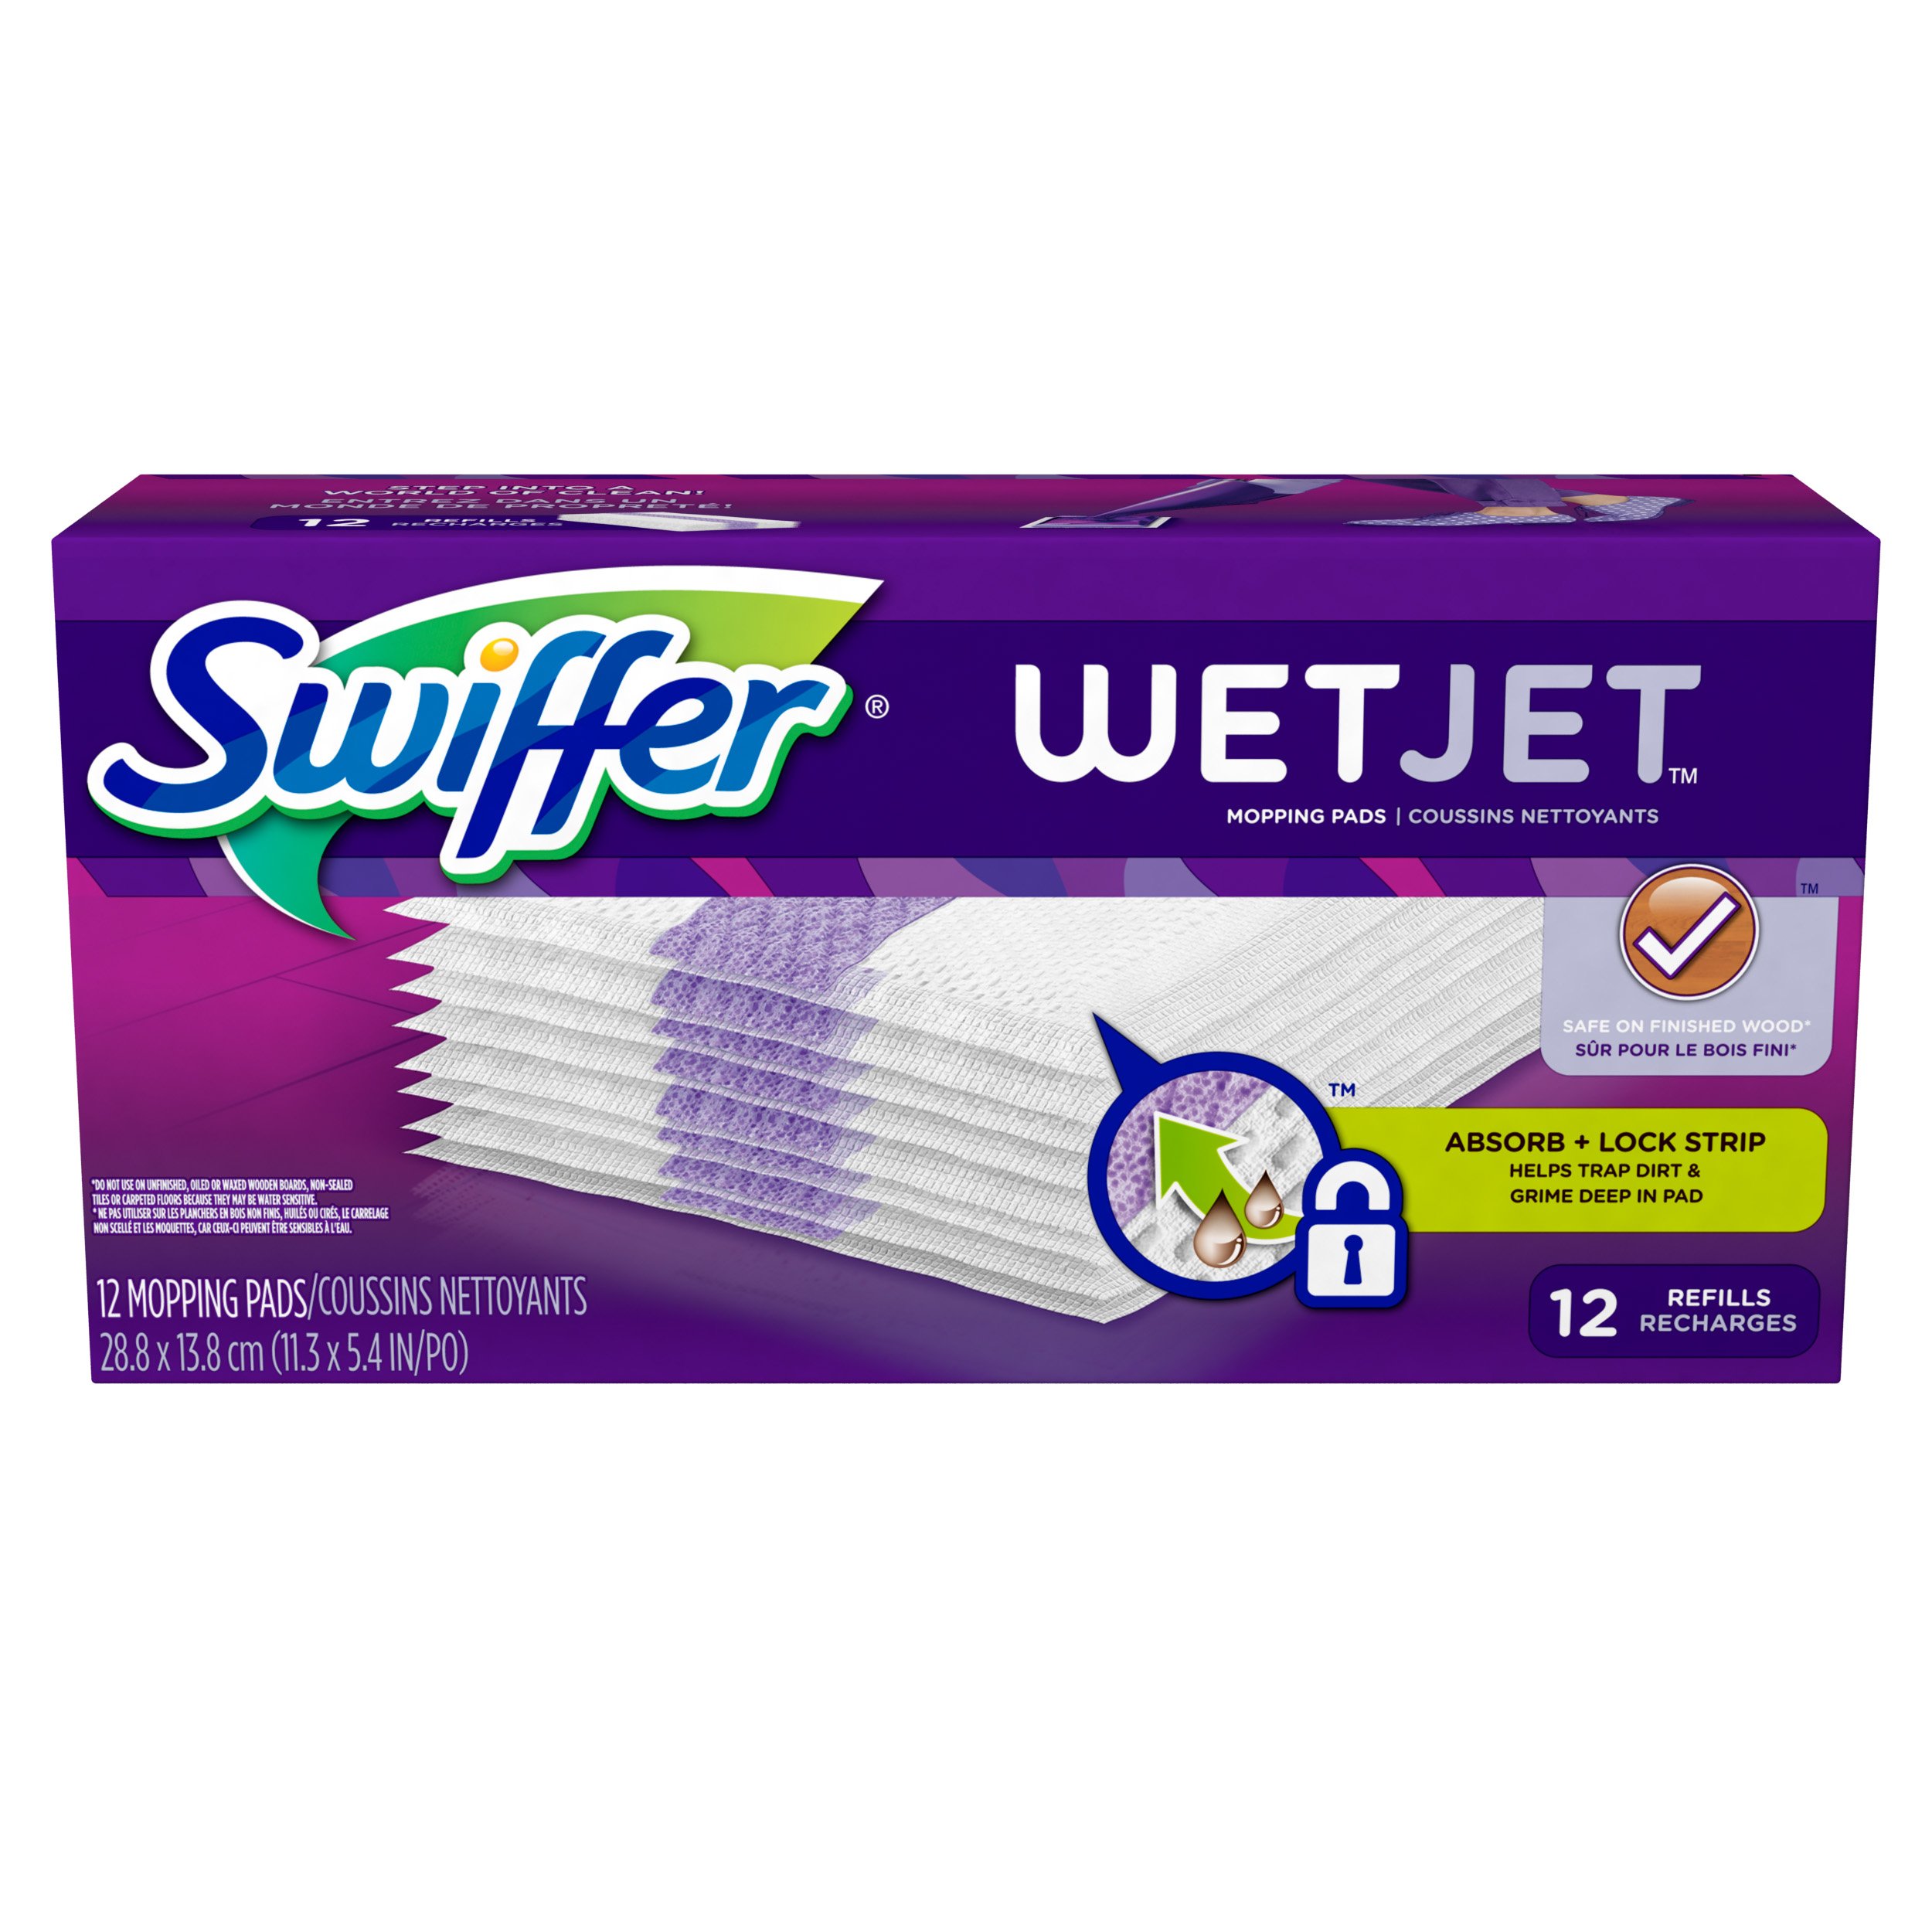 Swiffer WetJet Original Refills Cleaning Pads - Shop Mops at H-E-B